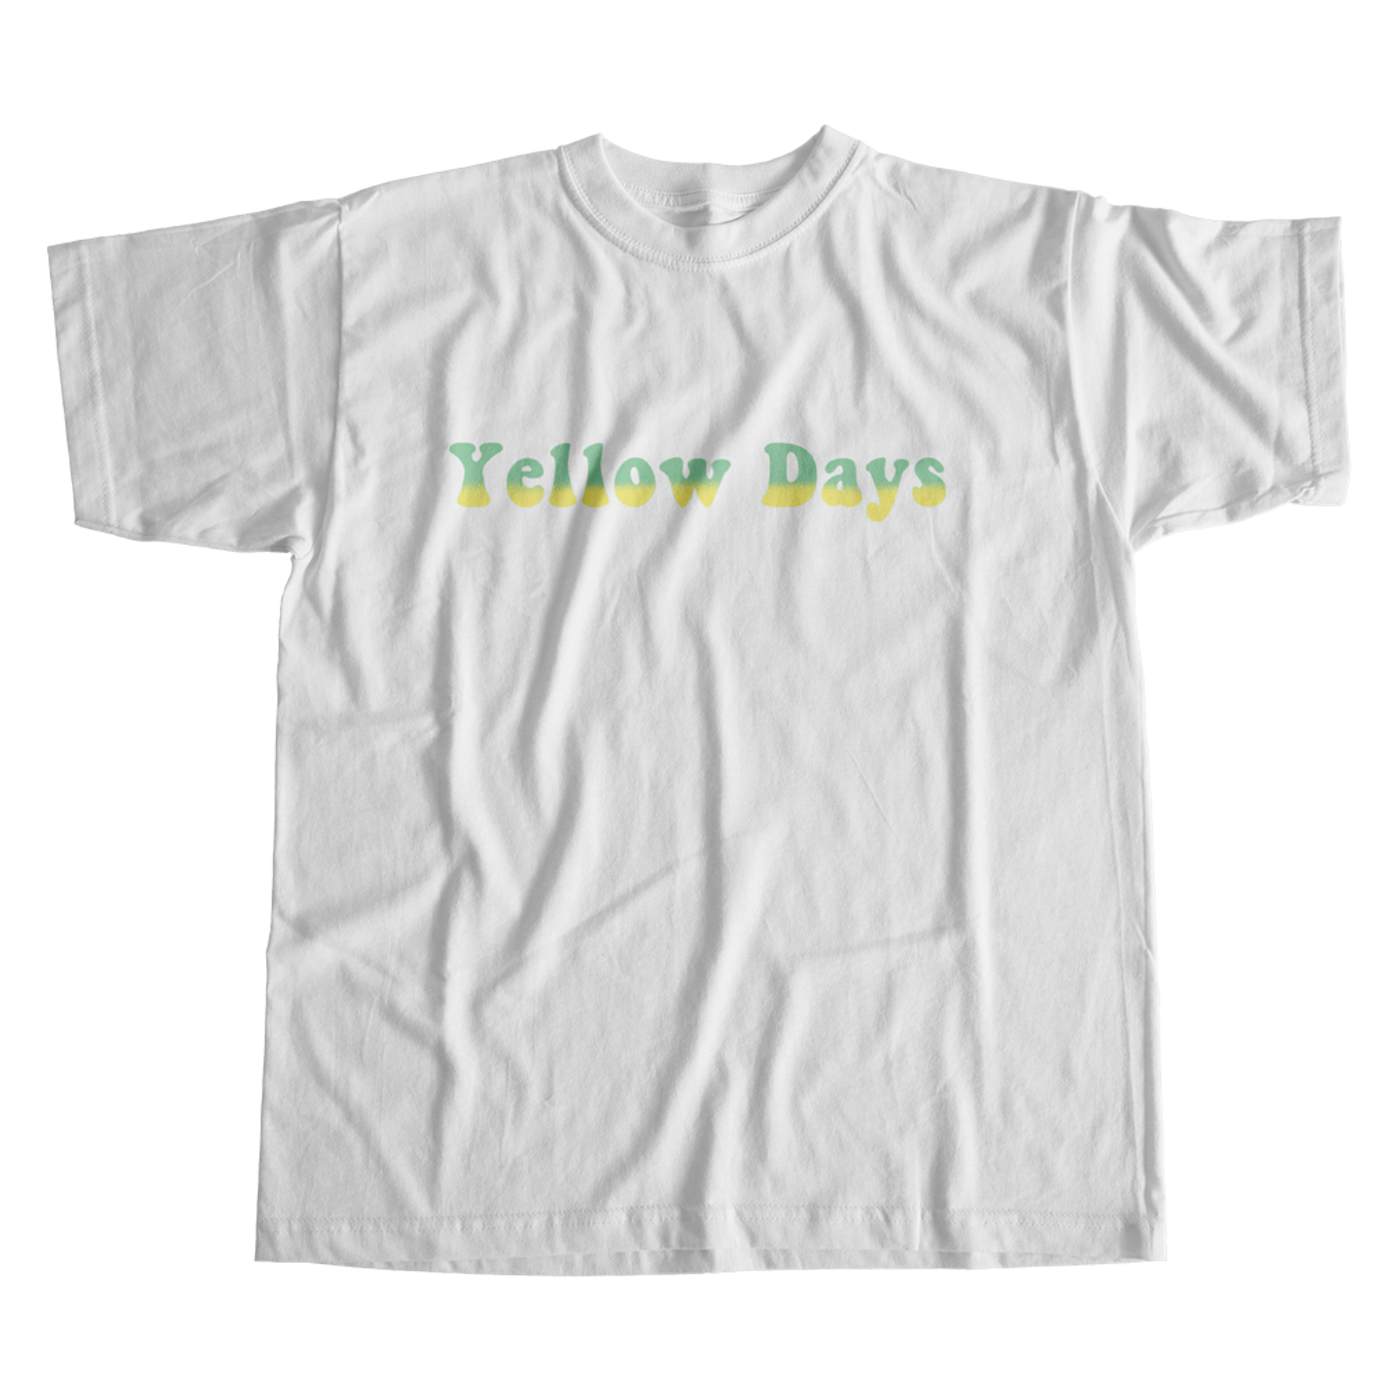 Yellow Days Treat You Right Tee w/ Liam Hopkins (White)